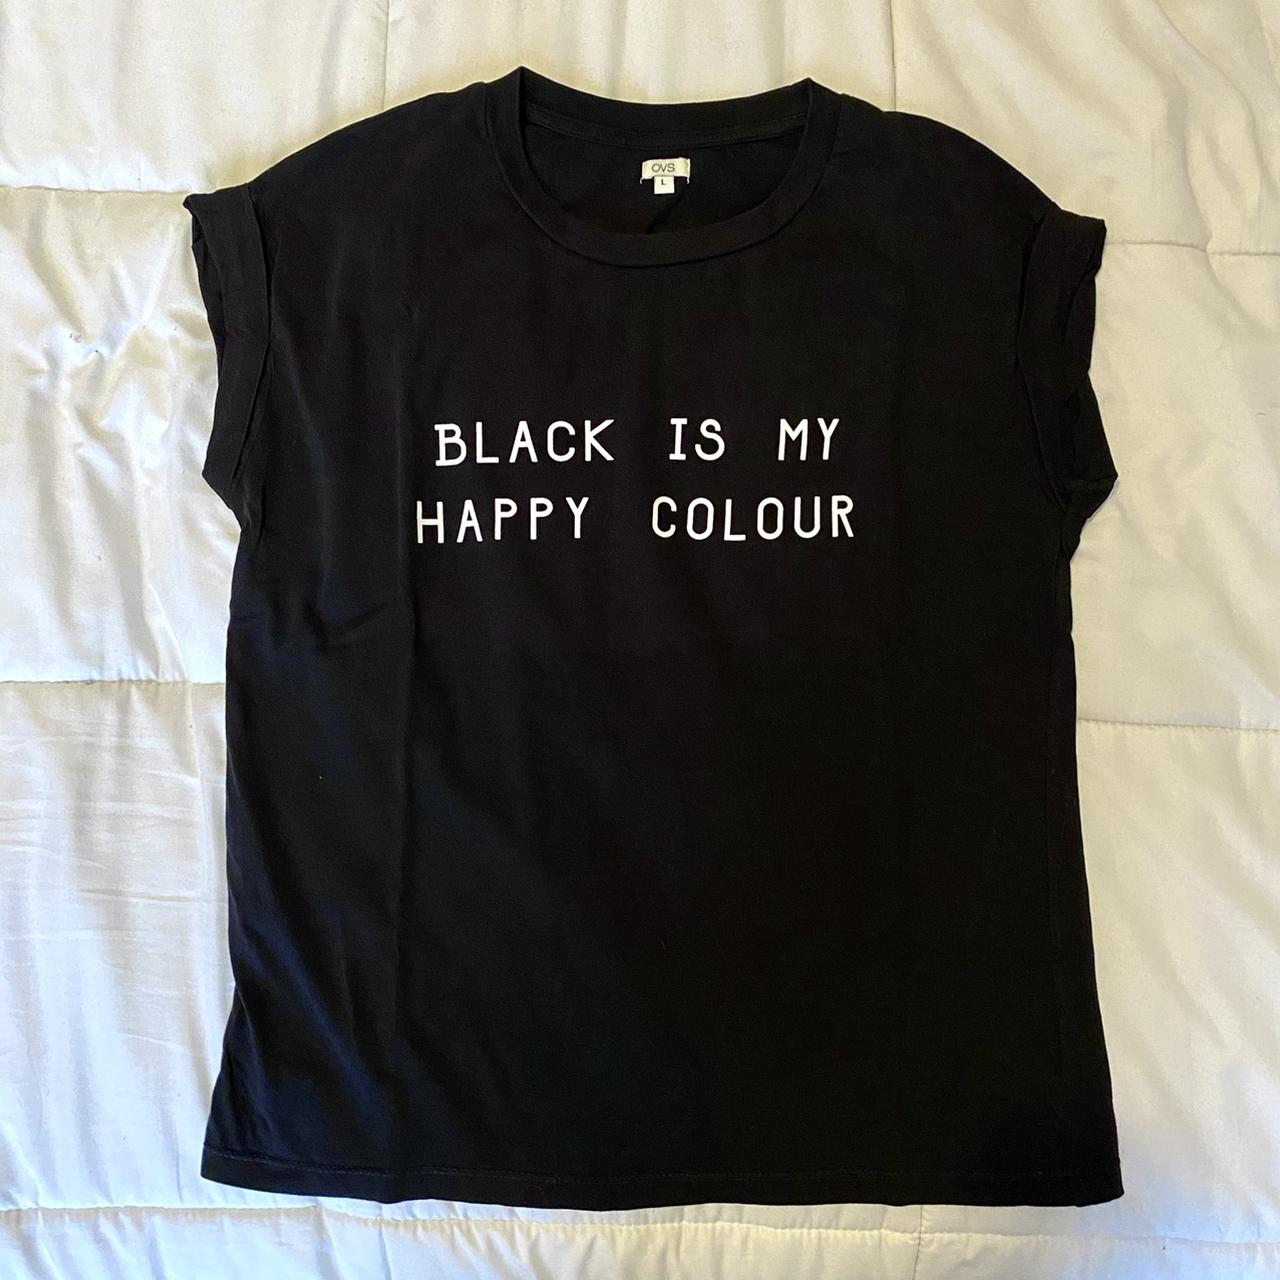 Women's Black T-shirt (4)